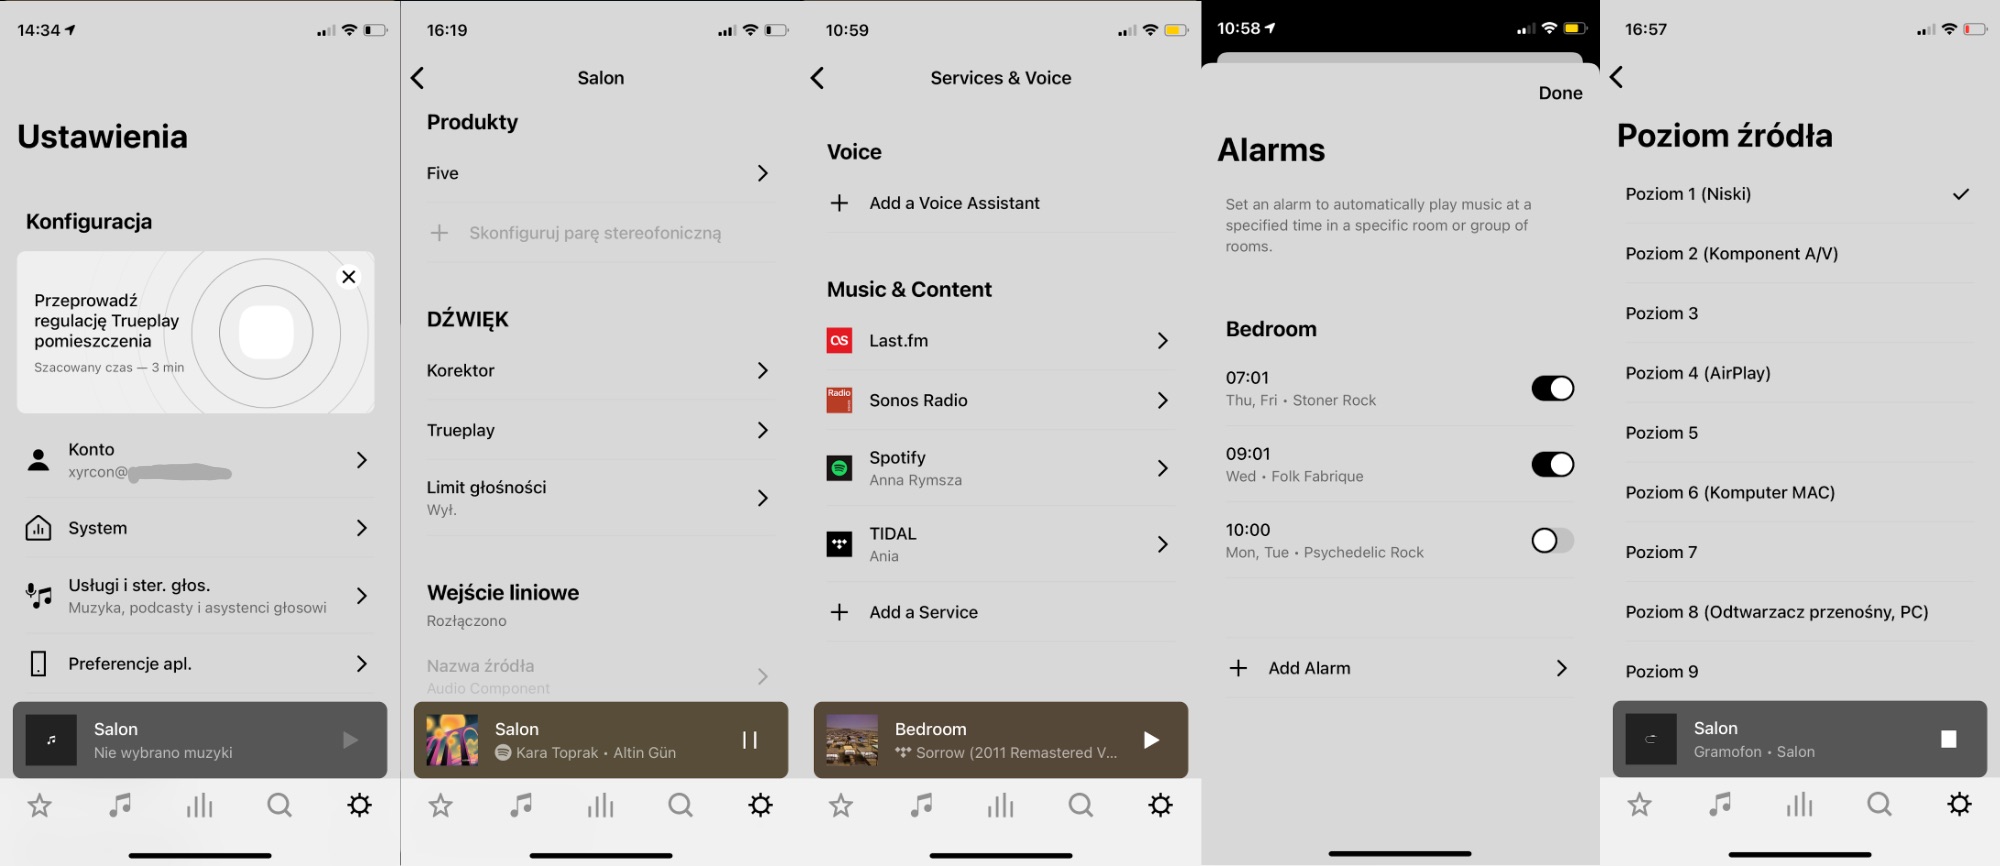 Sonos S2 aplikacja mobilna iOS dla Sonos Five